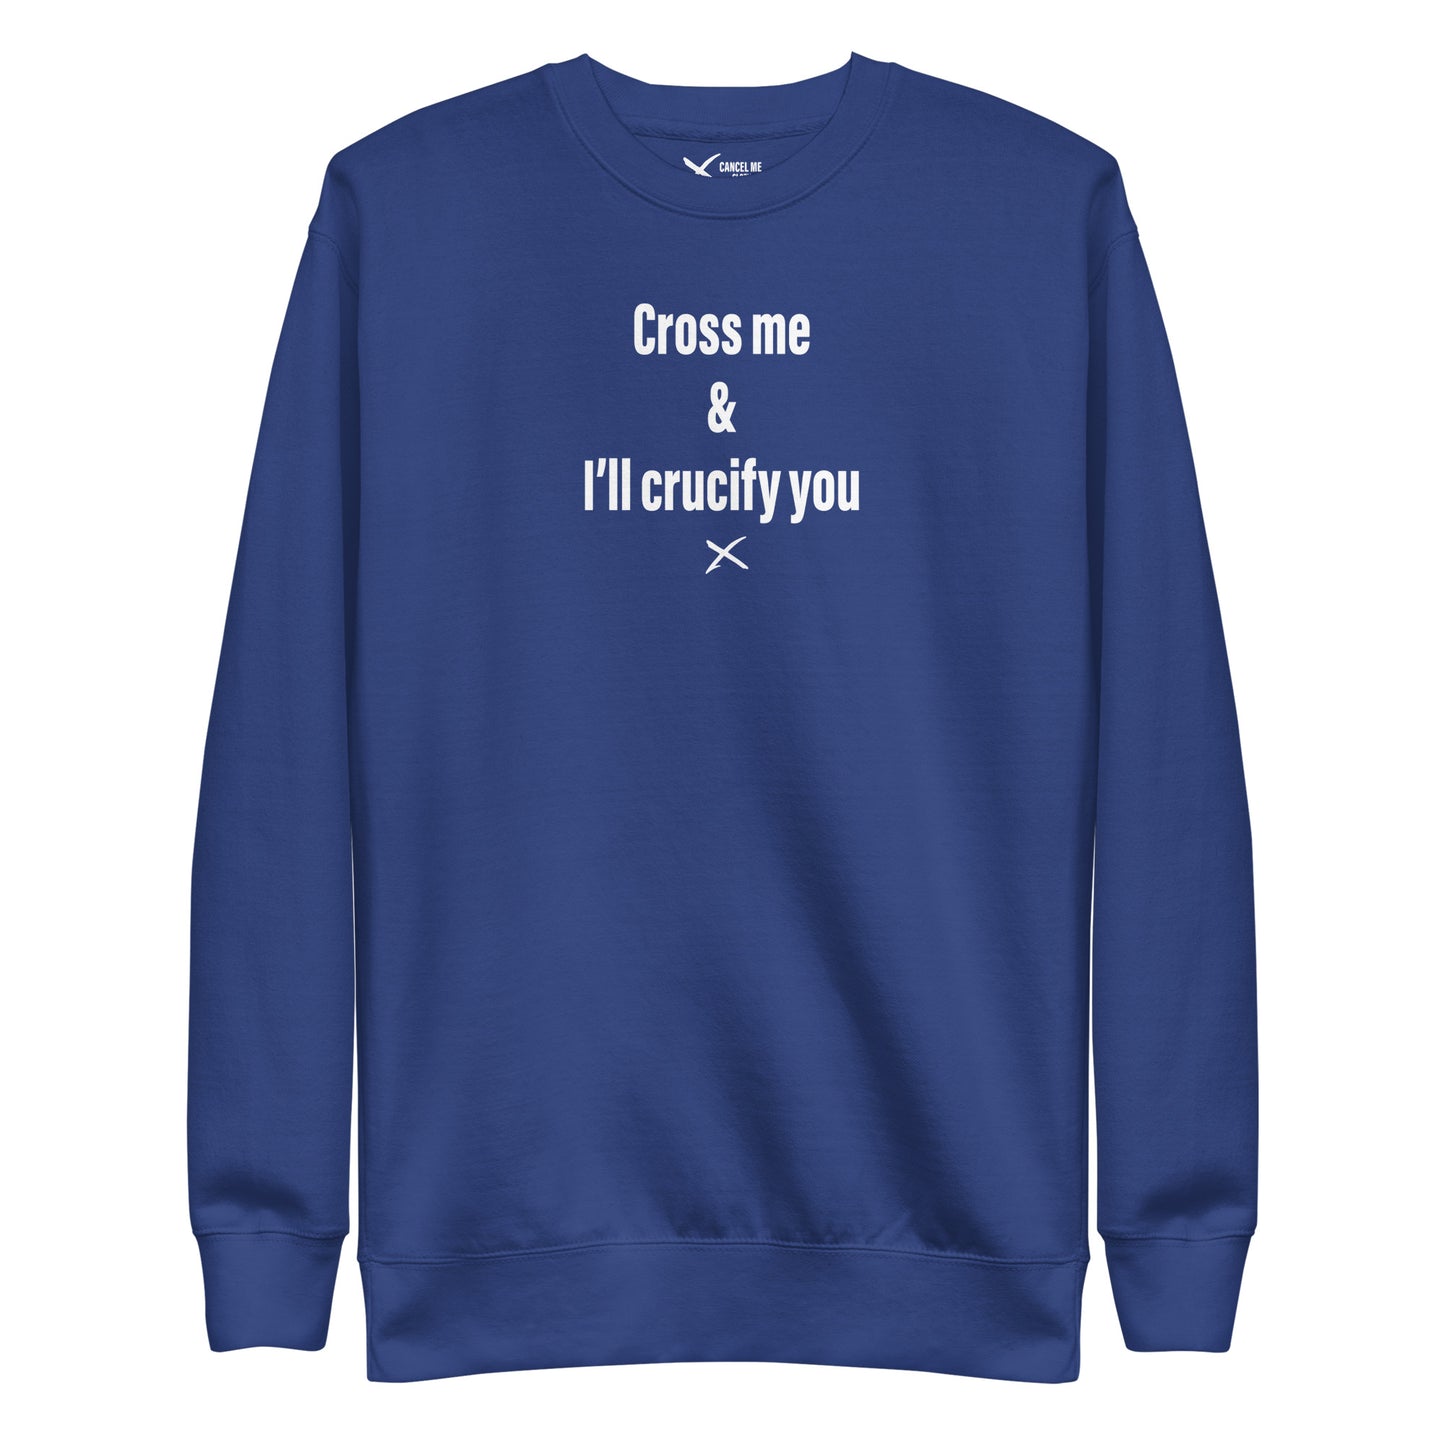 Cross me & I'll crucify you - Sweatshirt